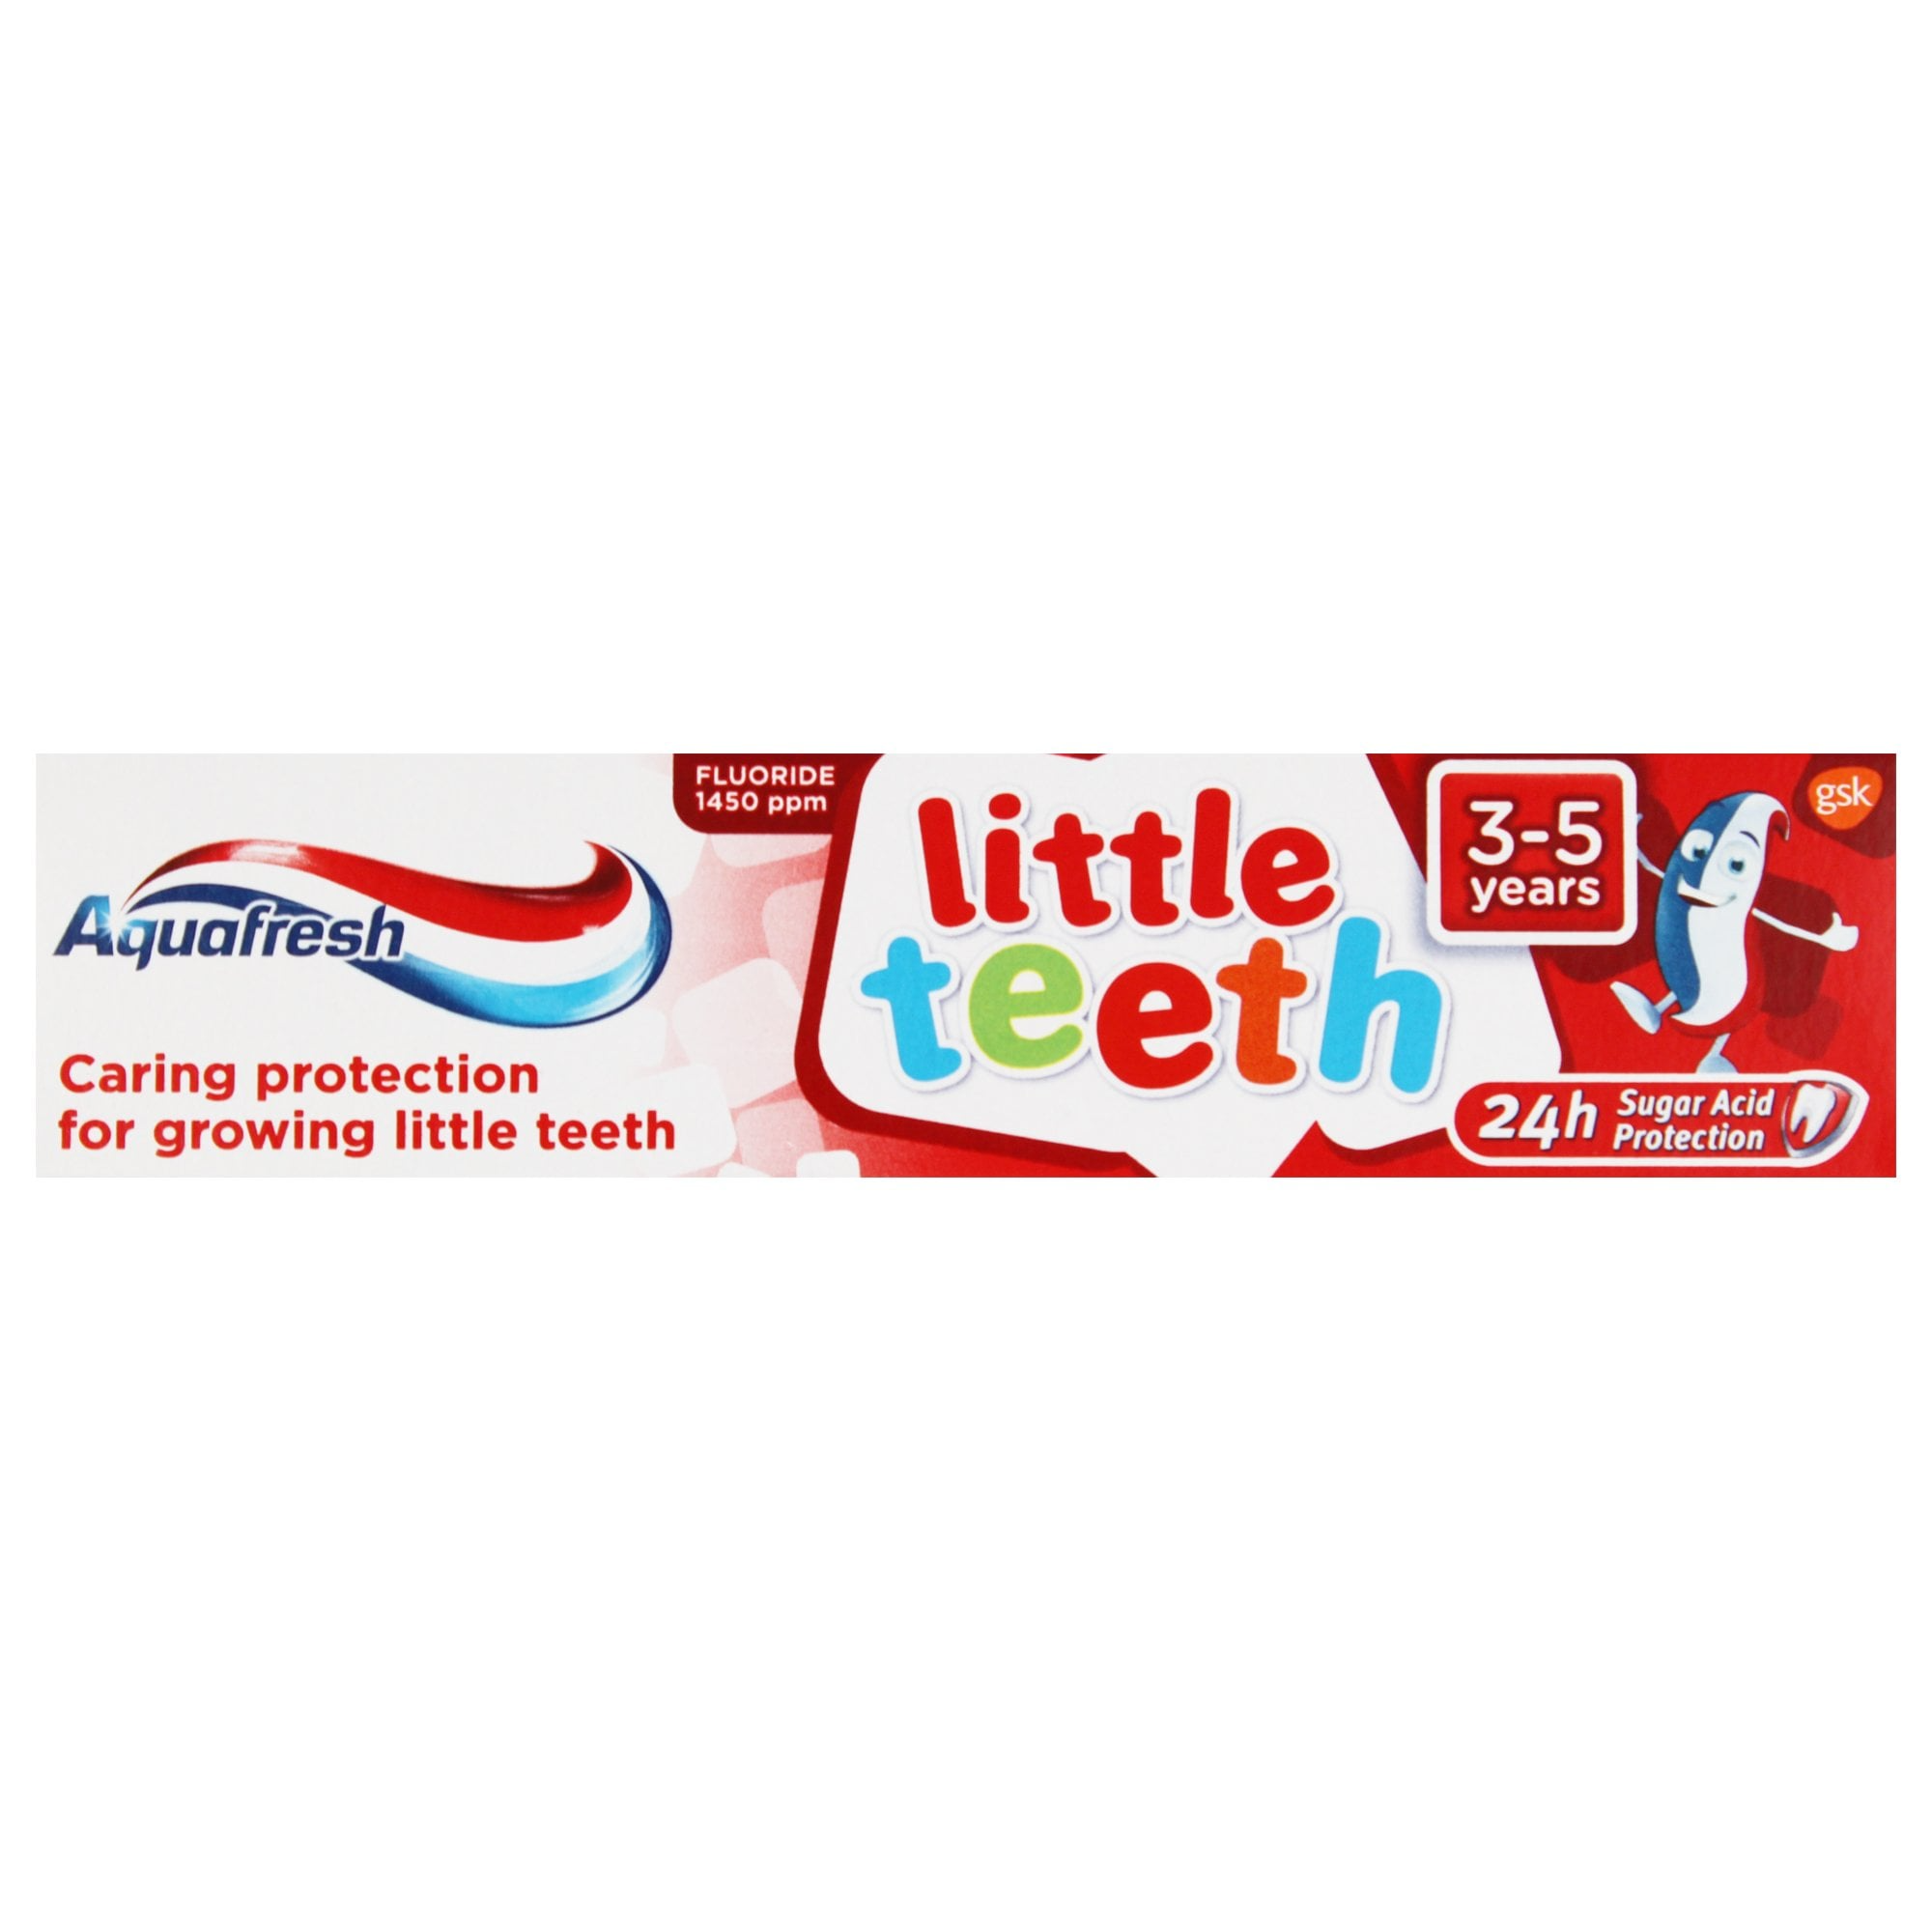 AQUAFRESH LITTLE TEETH 3-5 50ML UK – 12PK